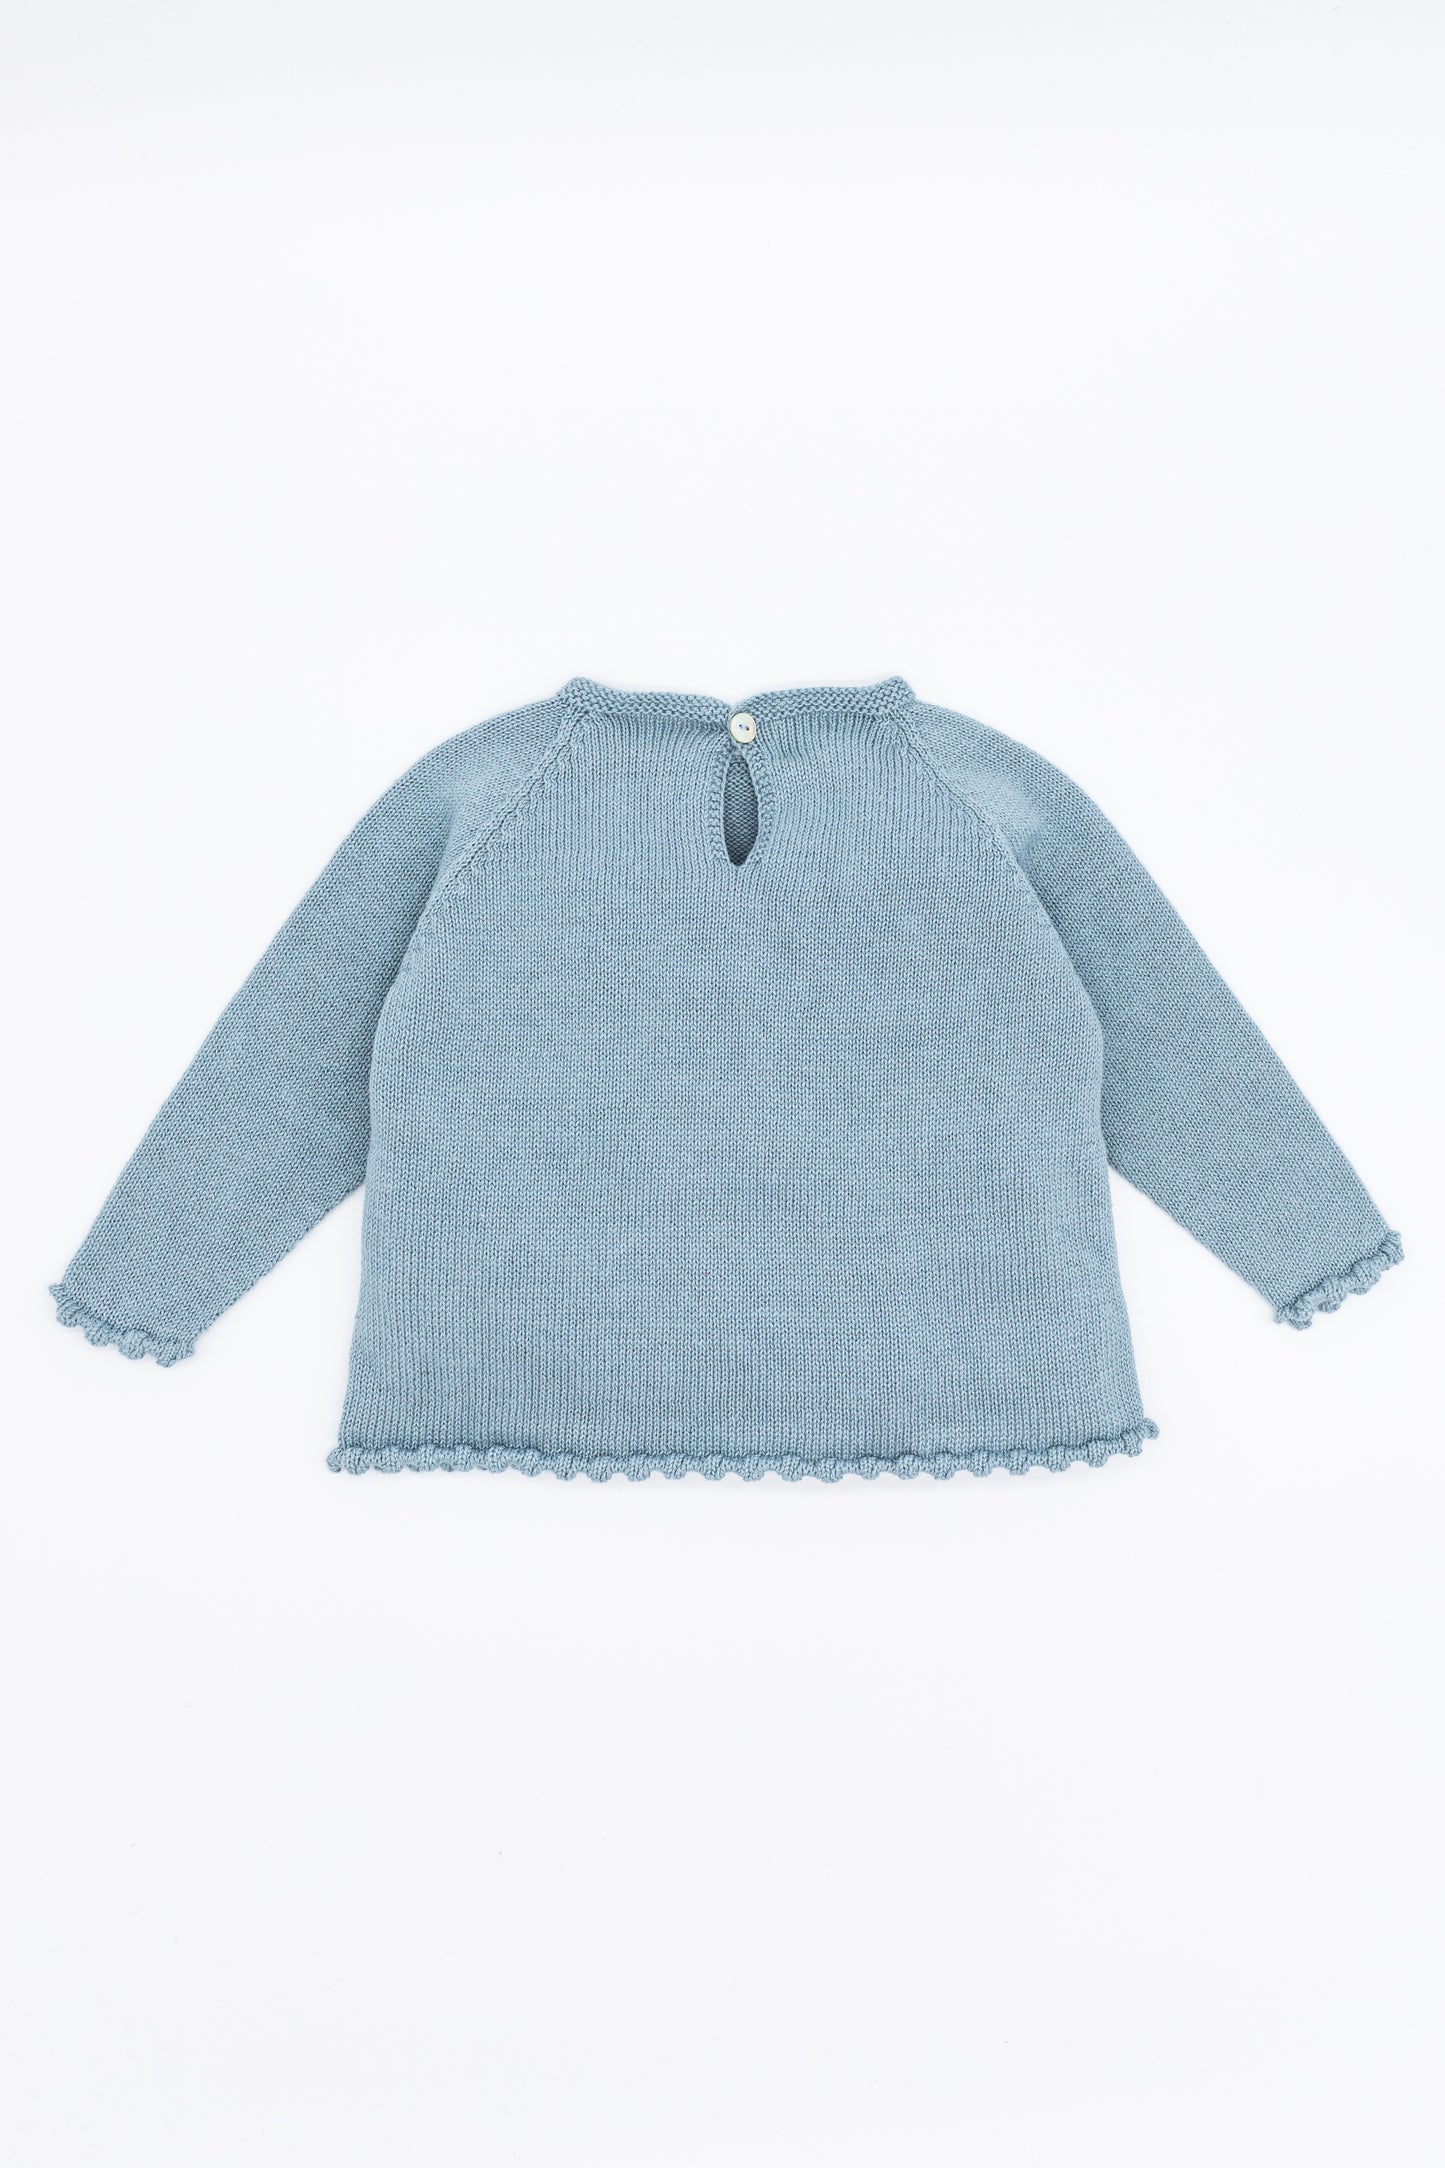 Blue knitted merino wool sweater